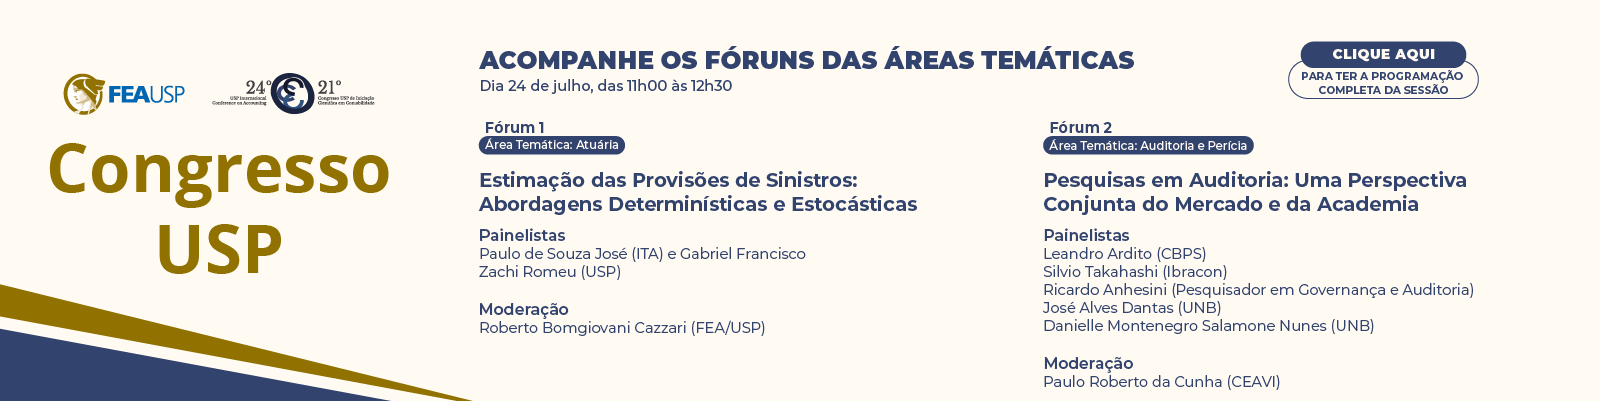 Banner_Forum-das-areas-tematicas_congresso-USP-1